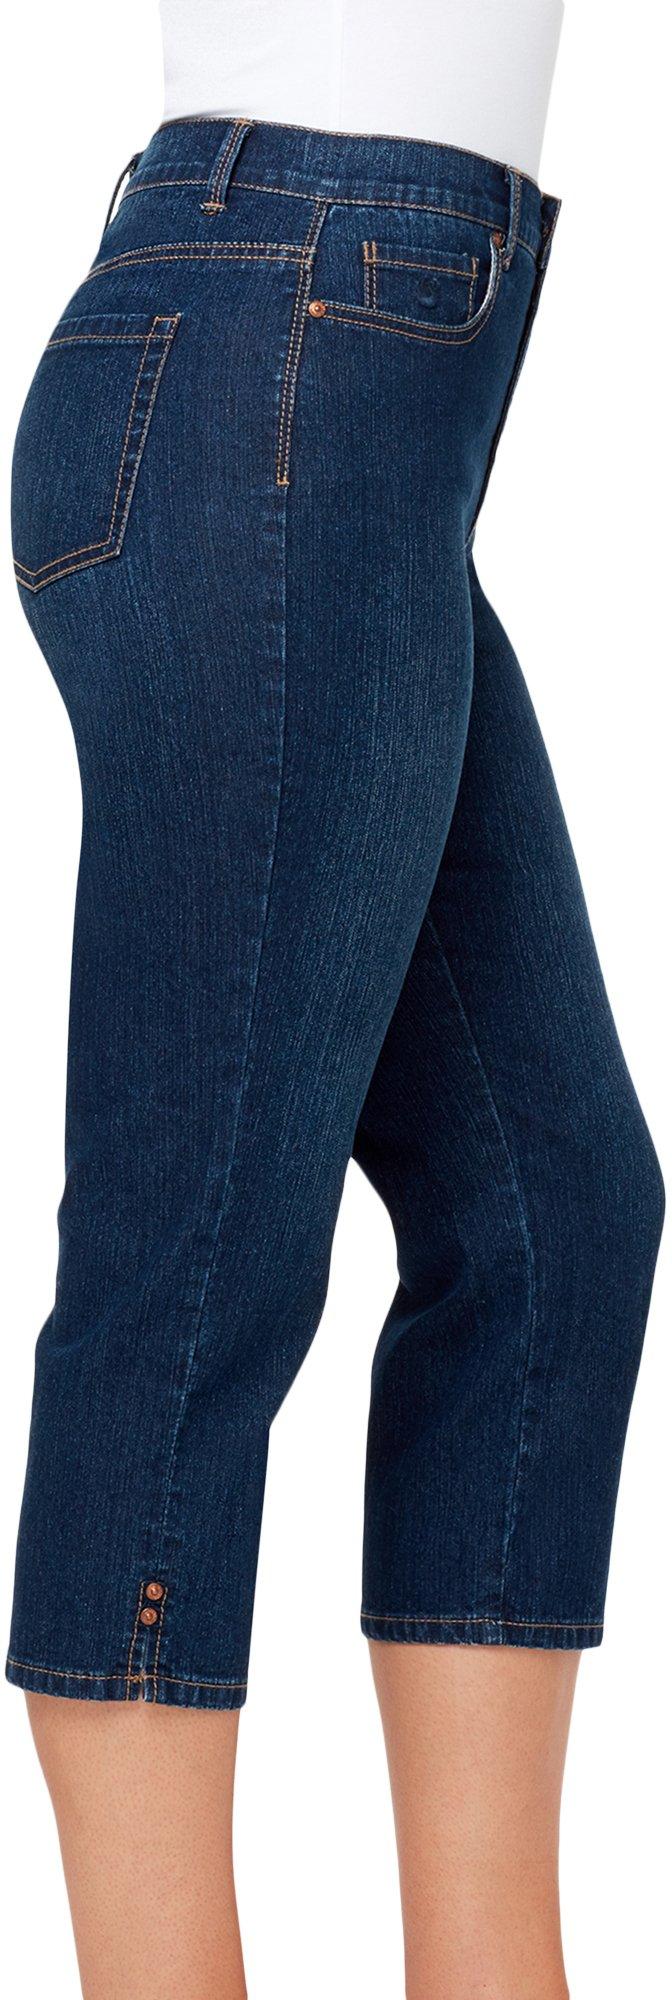 GLORIA VANDERBILT Womens Amanda Capri Jeans